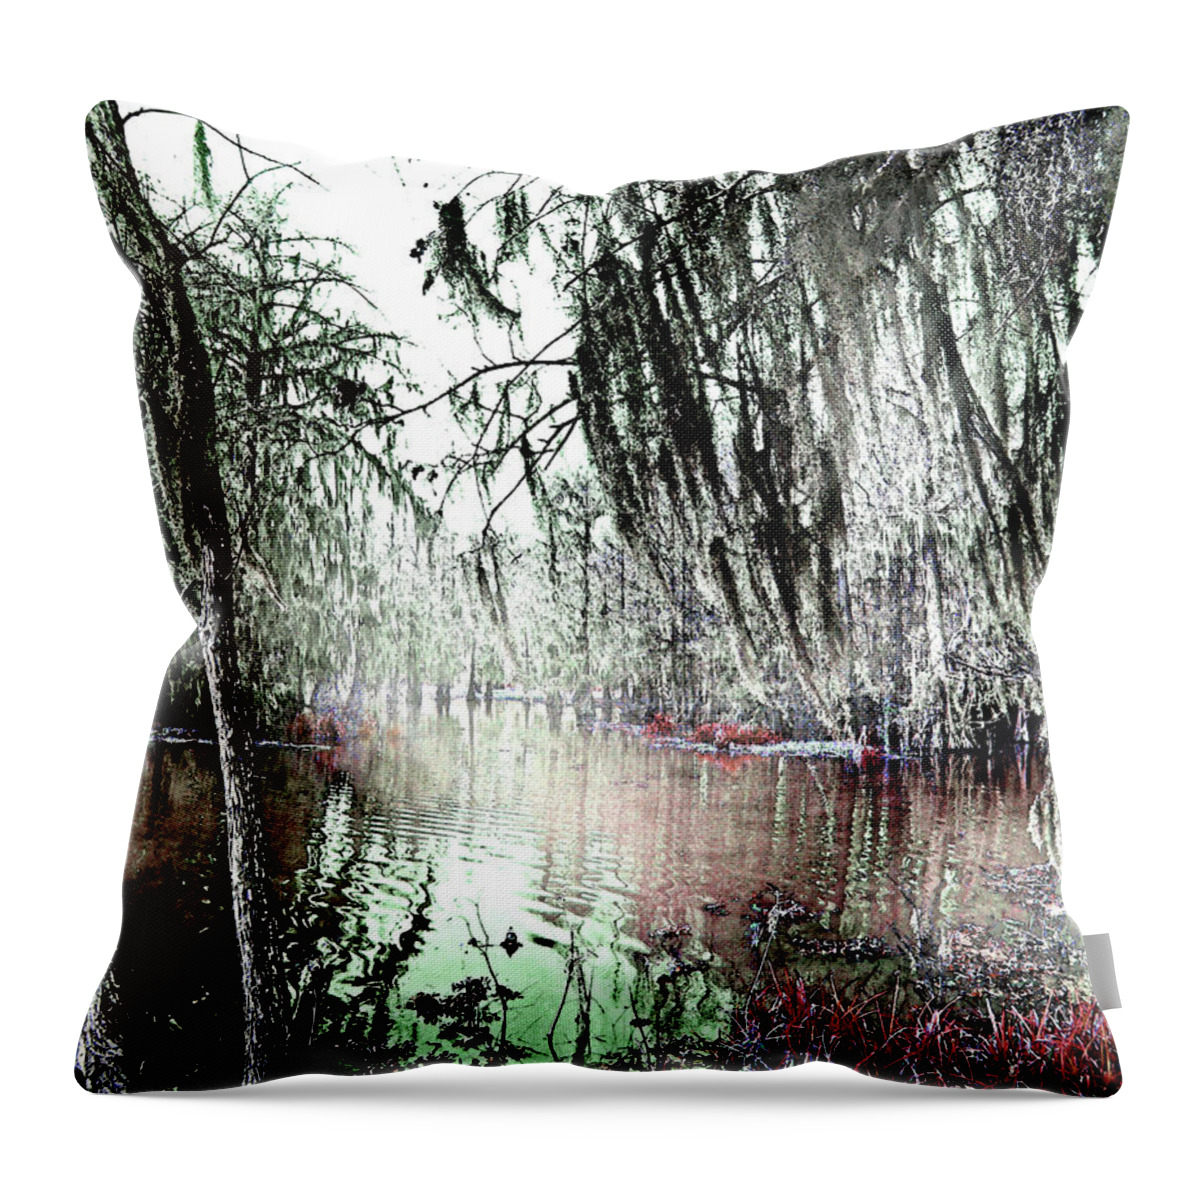 Swamp Throw Pillow featuring the photograph Lake Martin Swamp by Lizi Beard-Ward